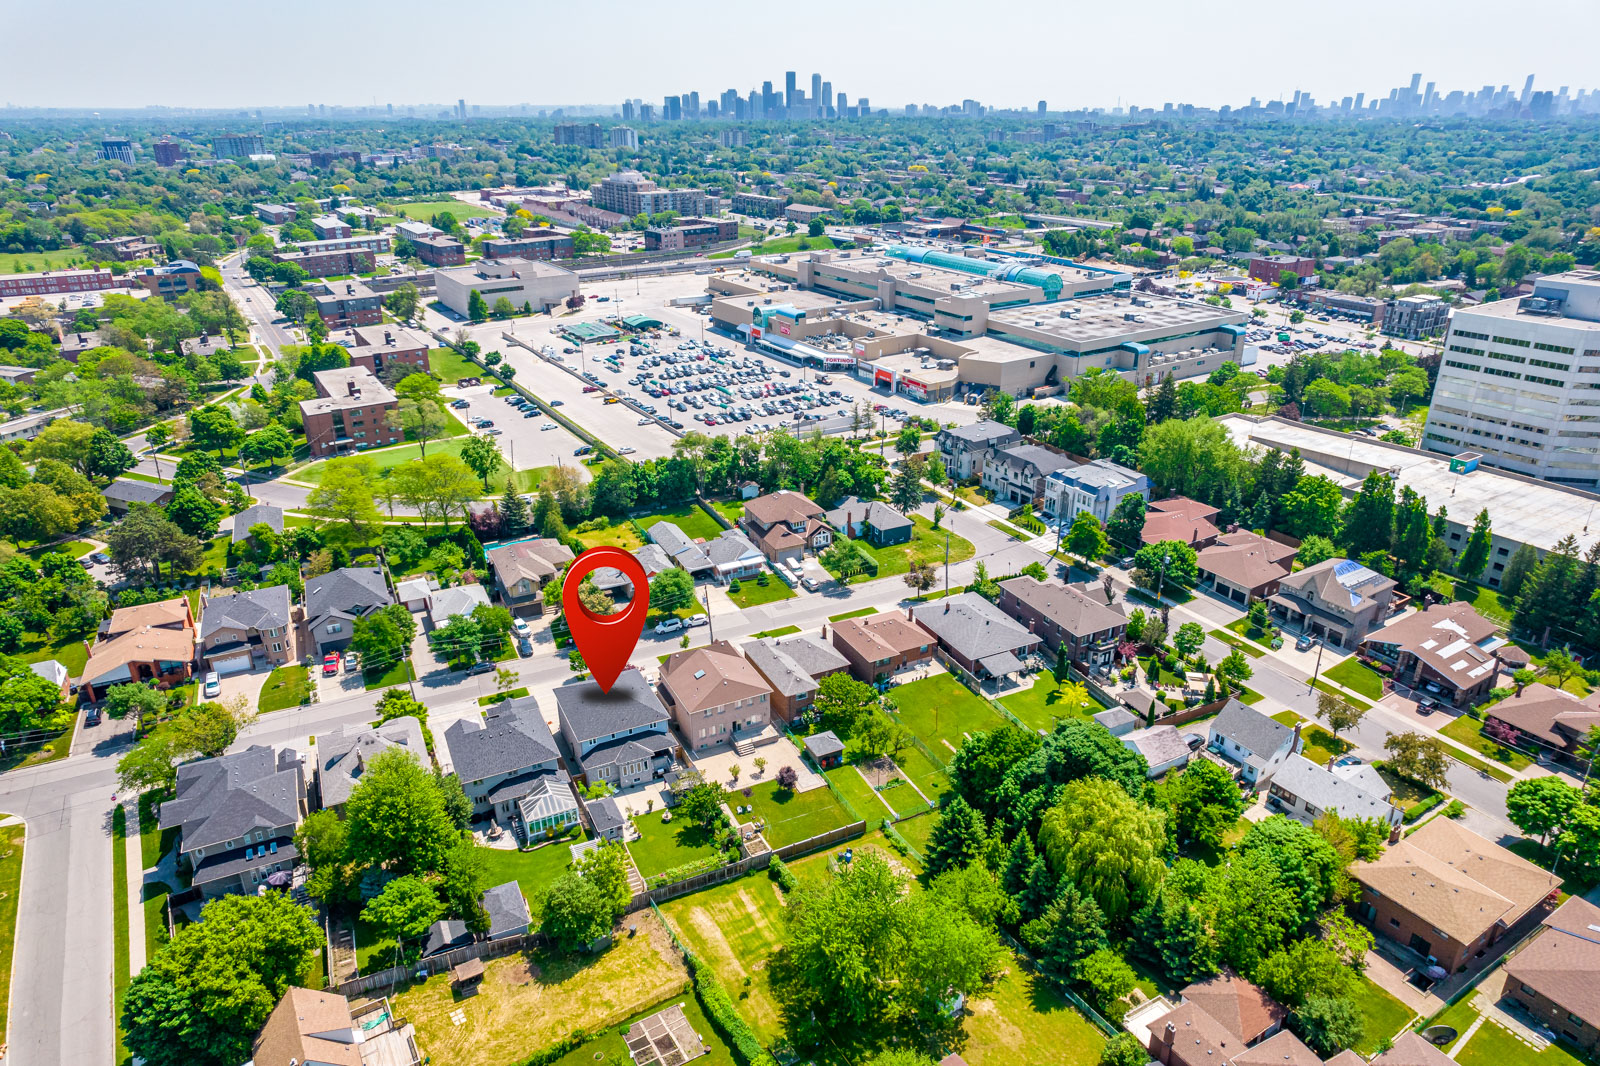 Aerial photo of The 6ix's North York neighbourhood.